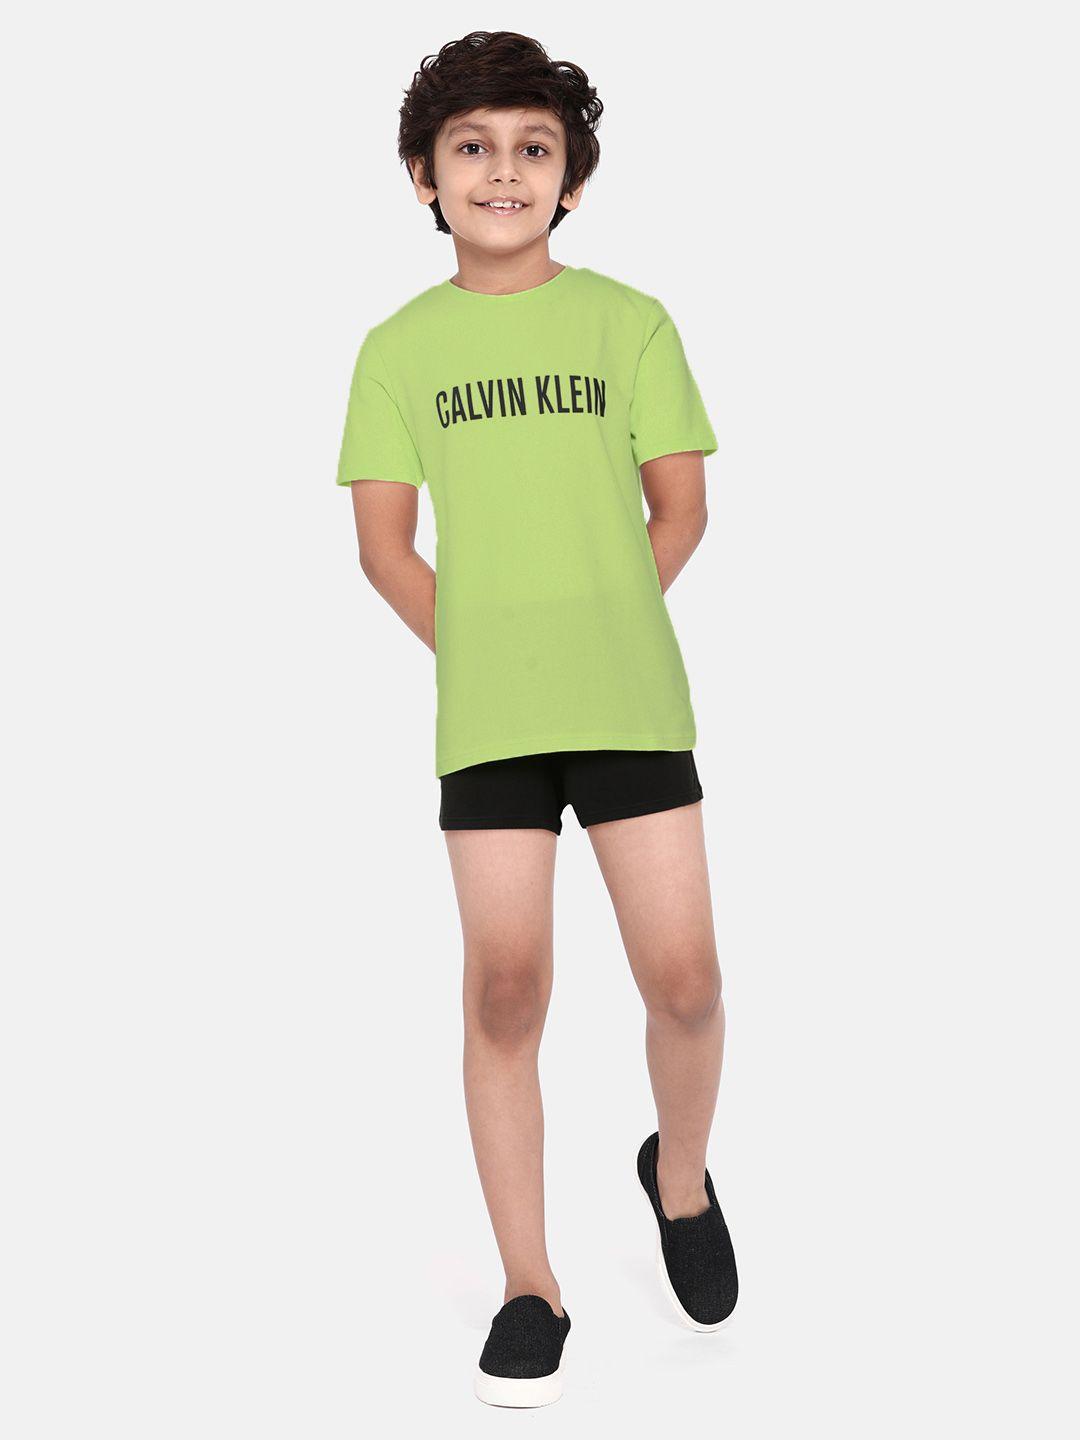 calvin klein underwear boys lime green & black printed t-shirt with shorts